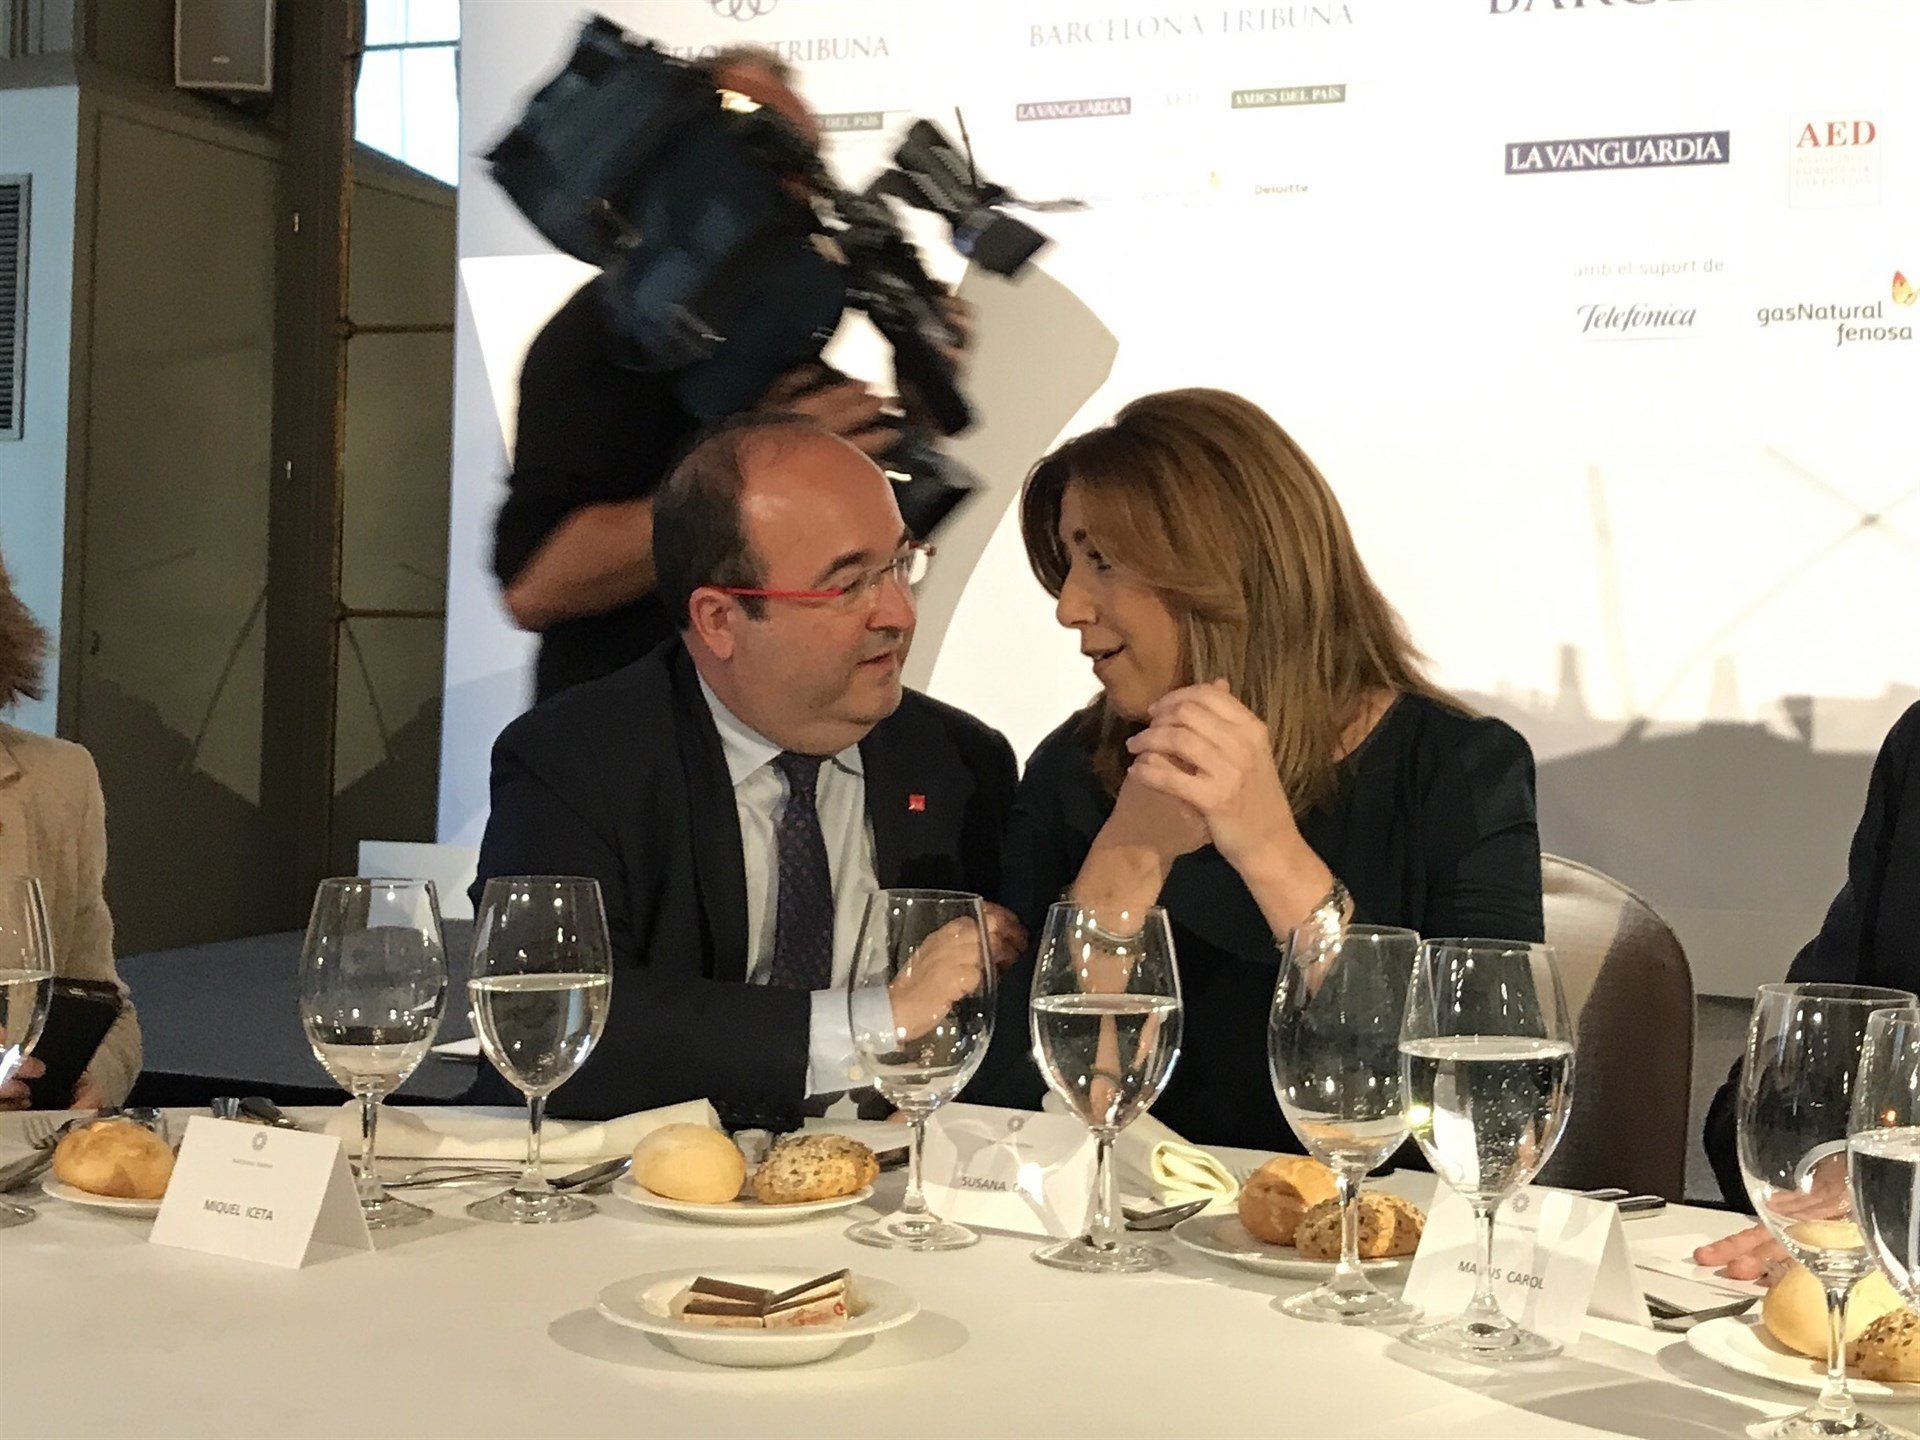 Susana Díaz equipara a Puigdemont y Le Pen: "Dicen muchas mentiras"